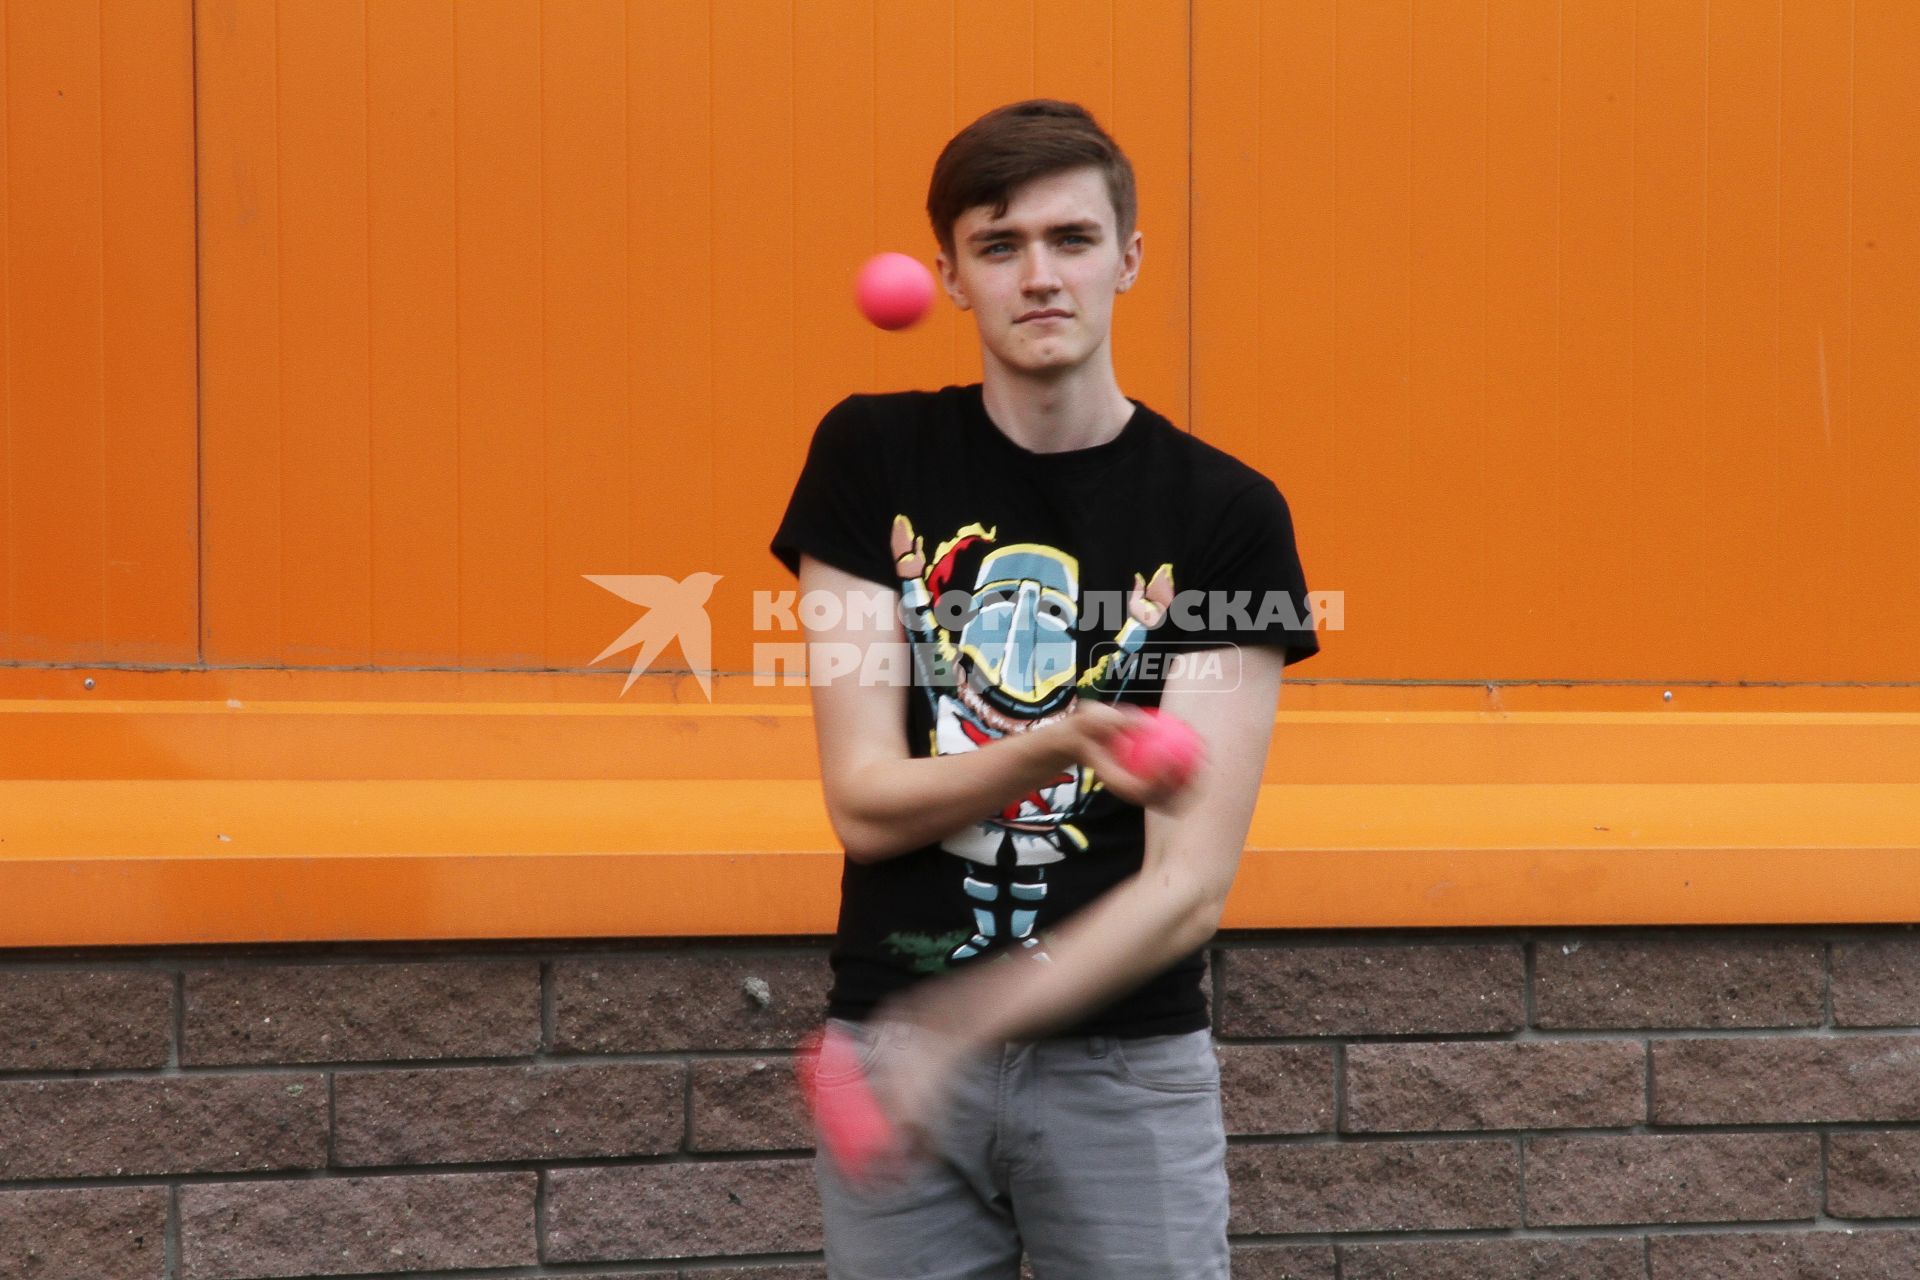 Нижний Новгород. Фестиваль жонглеов. Мужчина жонглирует мячами.